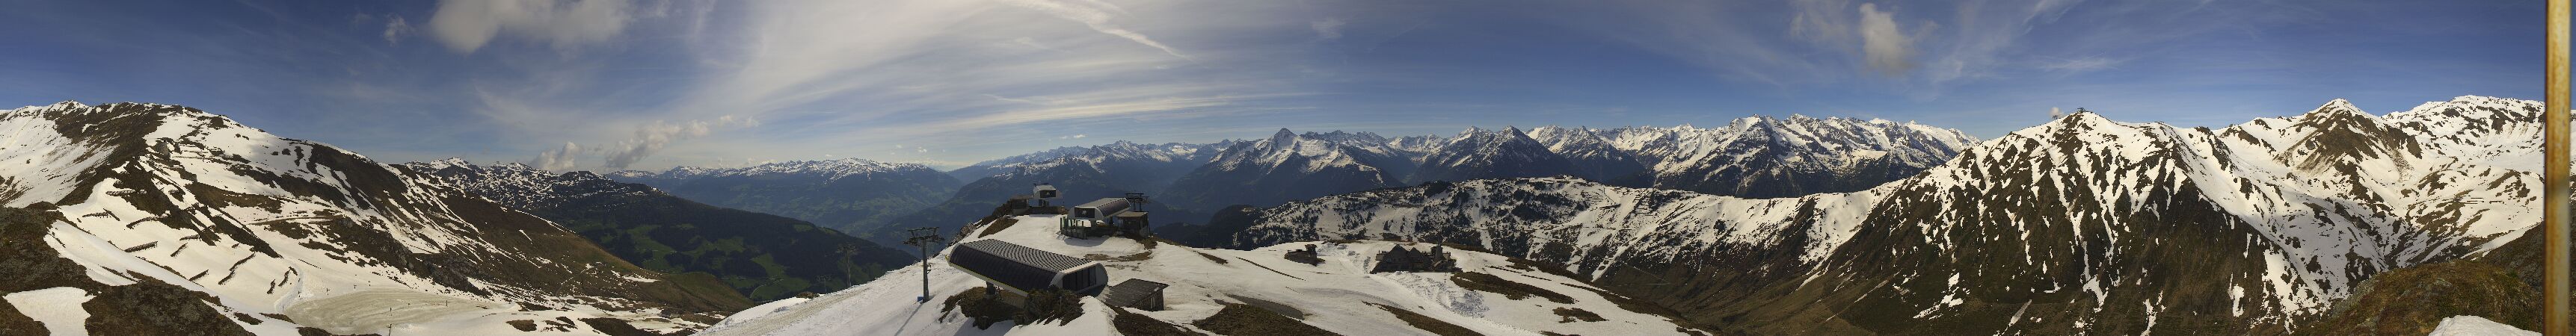 Mayrhofen webcam - ski lift stations Unterberg